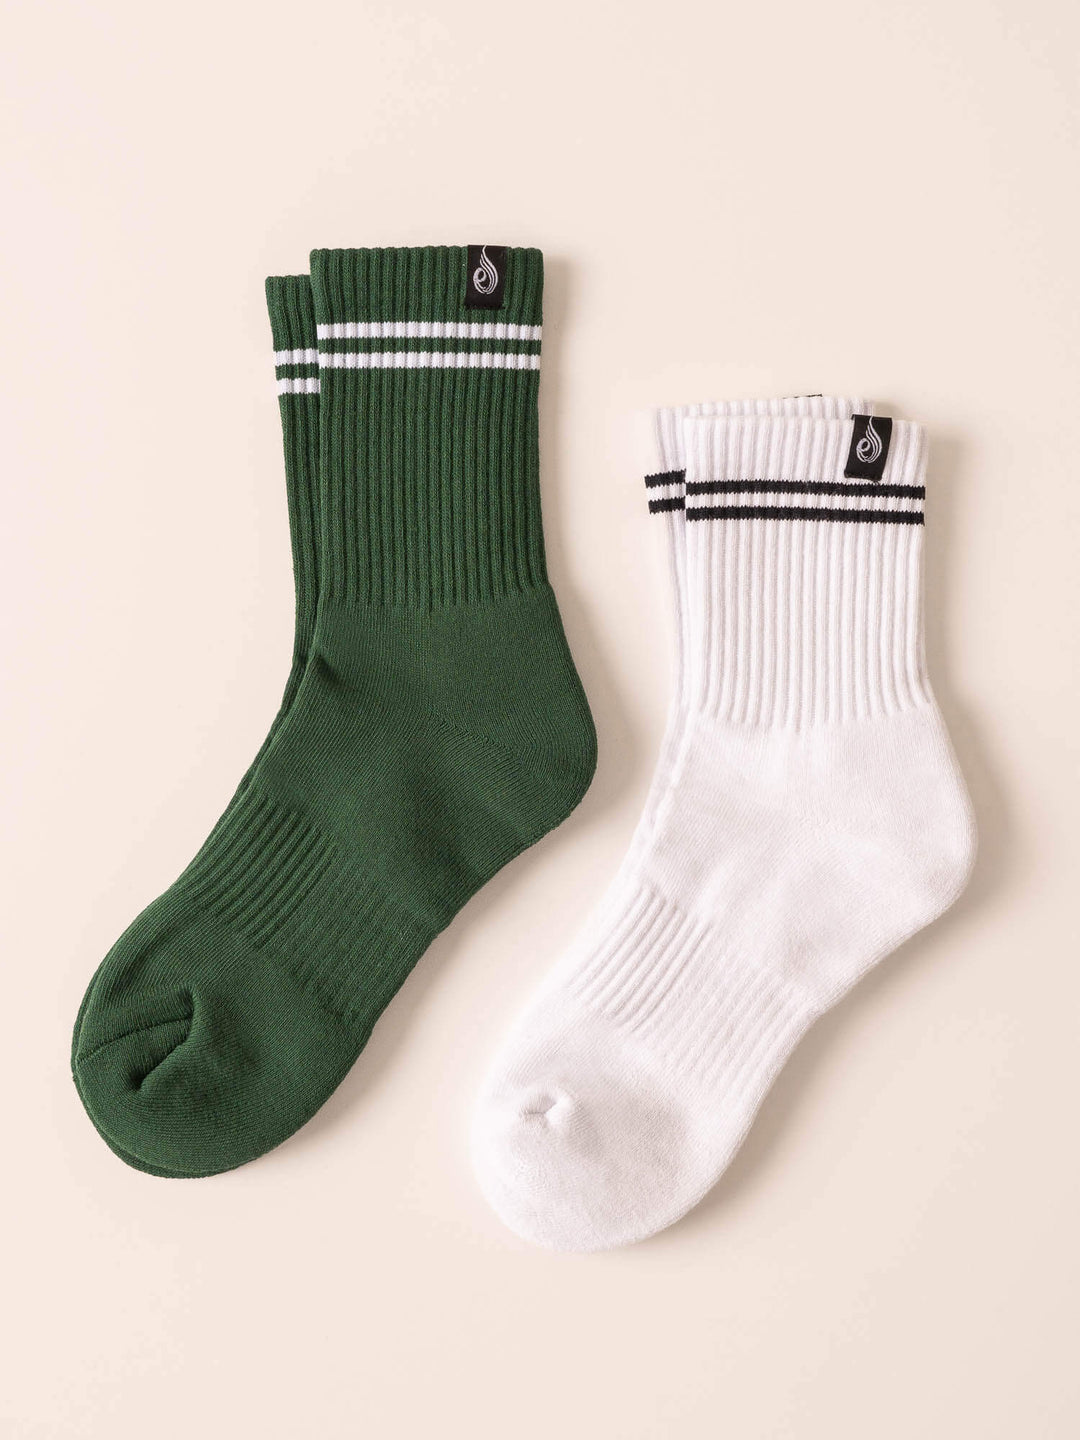 Ryderwear Stripe Crew Socks - White/Green 7-10